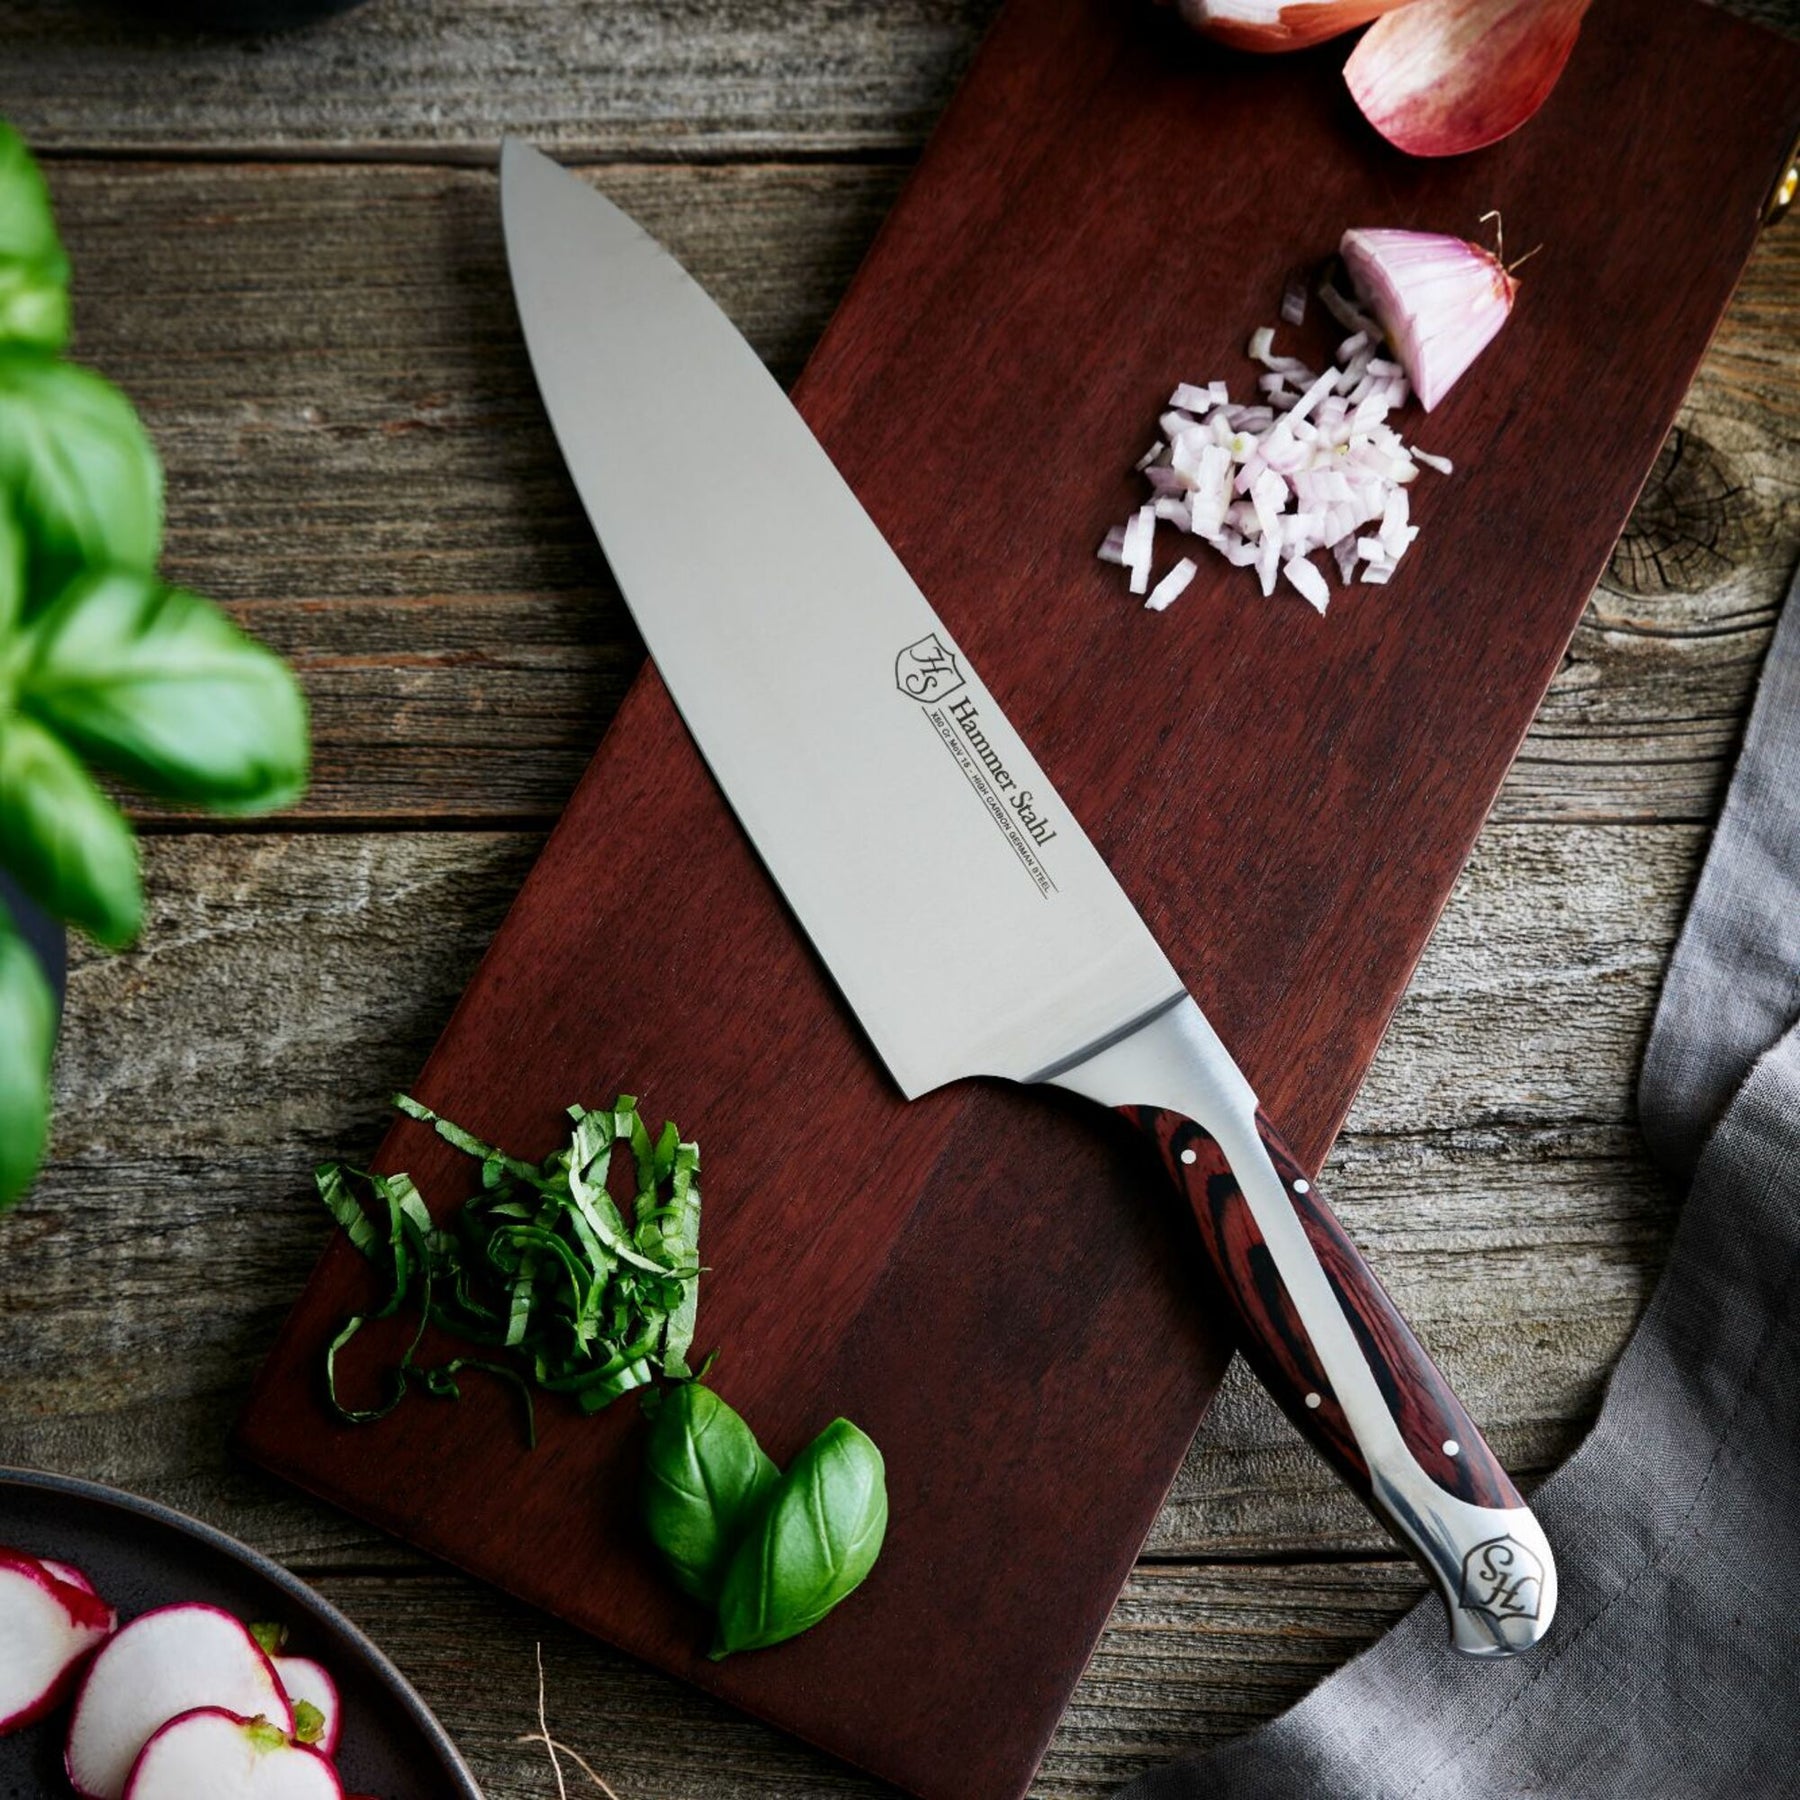 chef knife 8 Inch - kitchen knife German steel with Gift box - best ch –  sagler